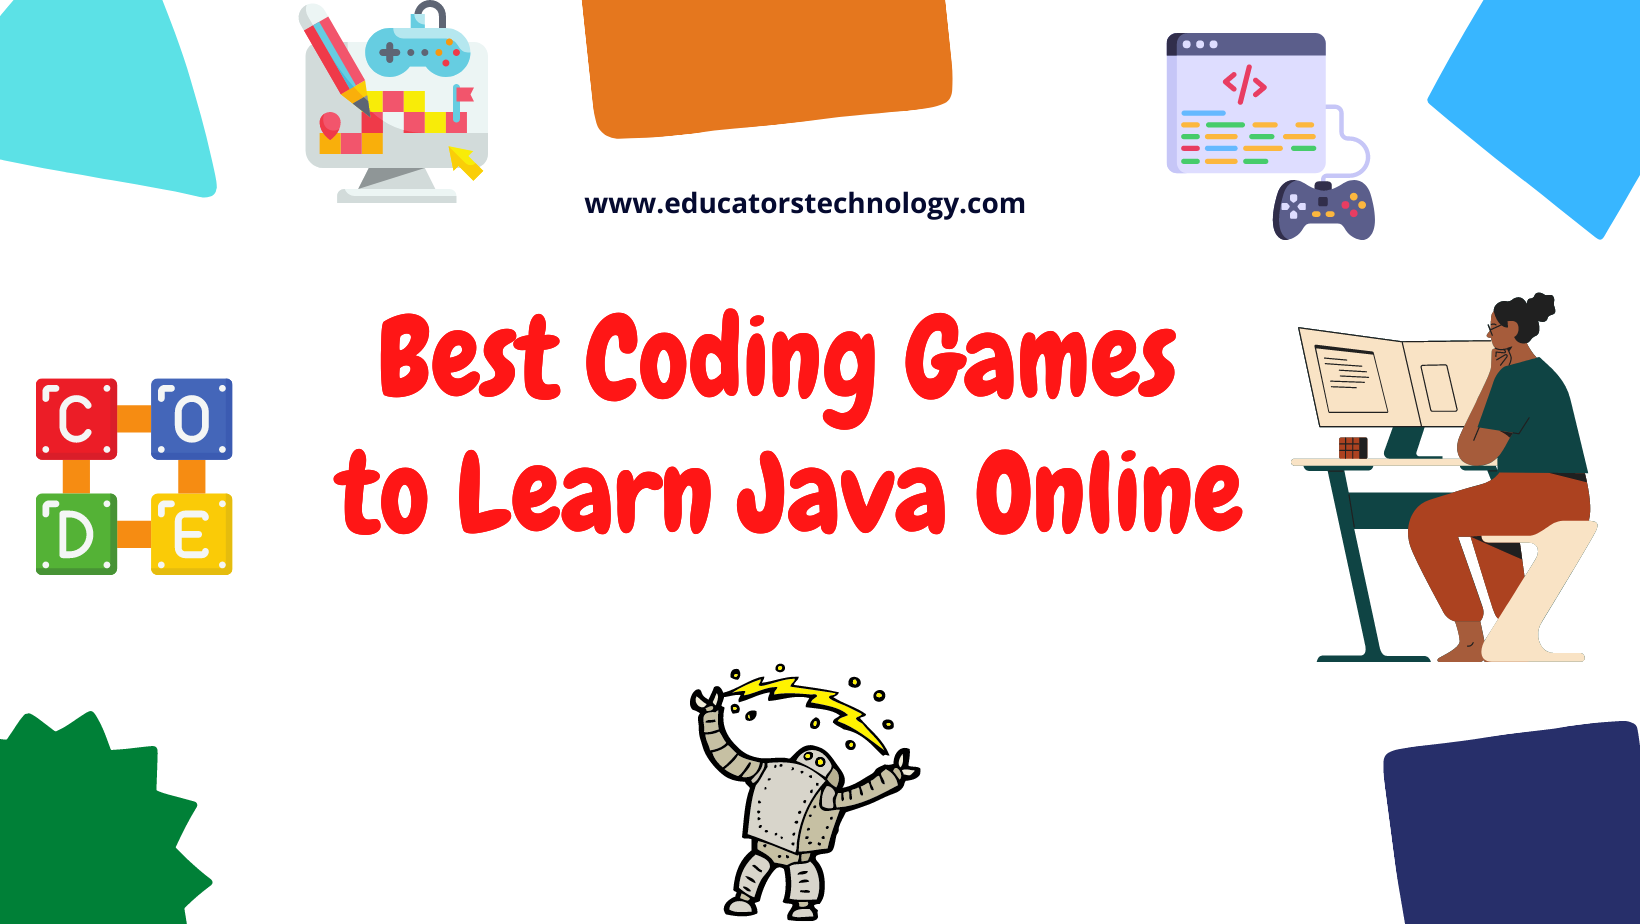 Java coding games